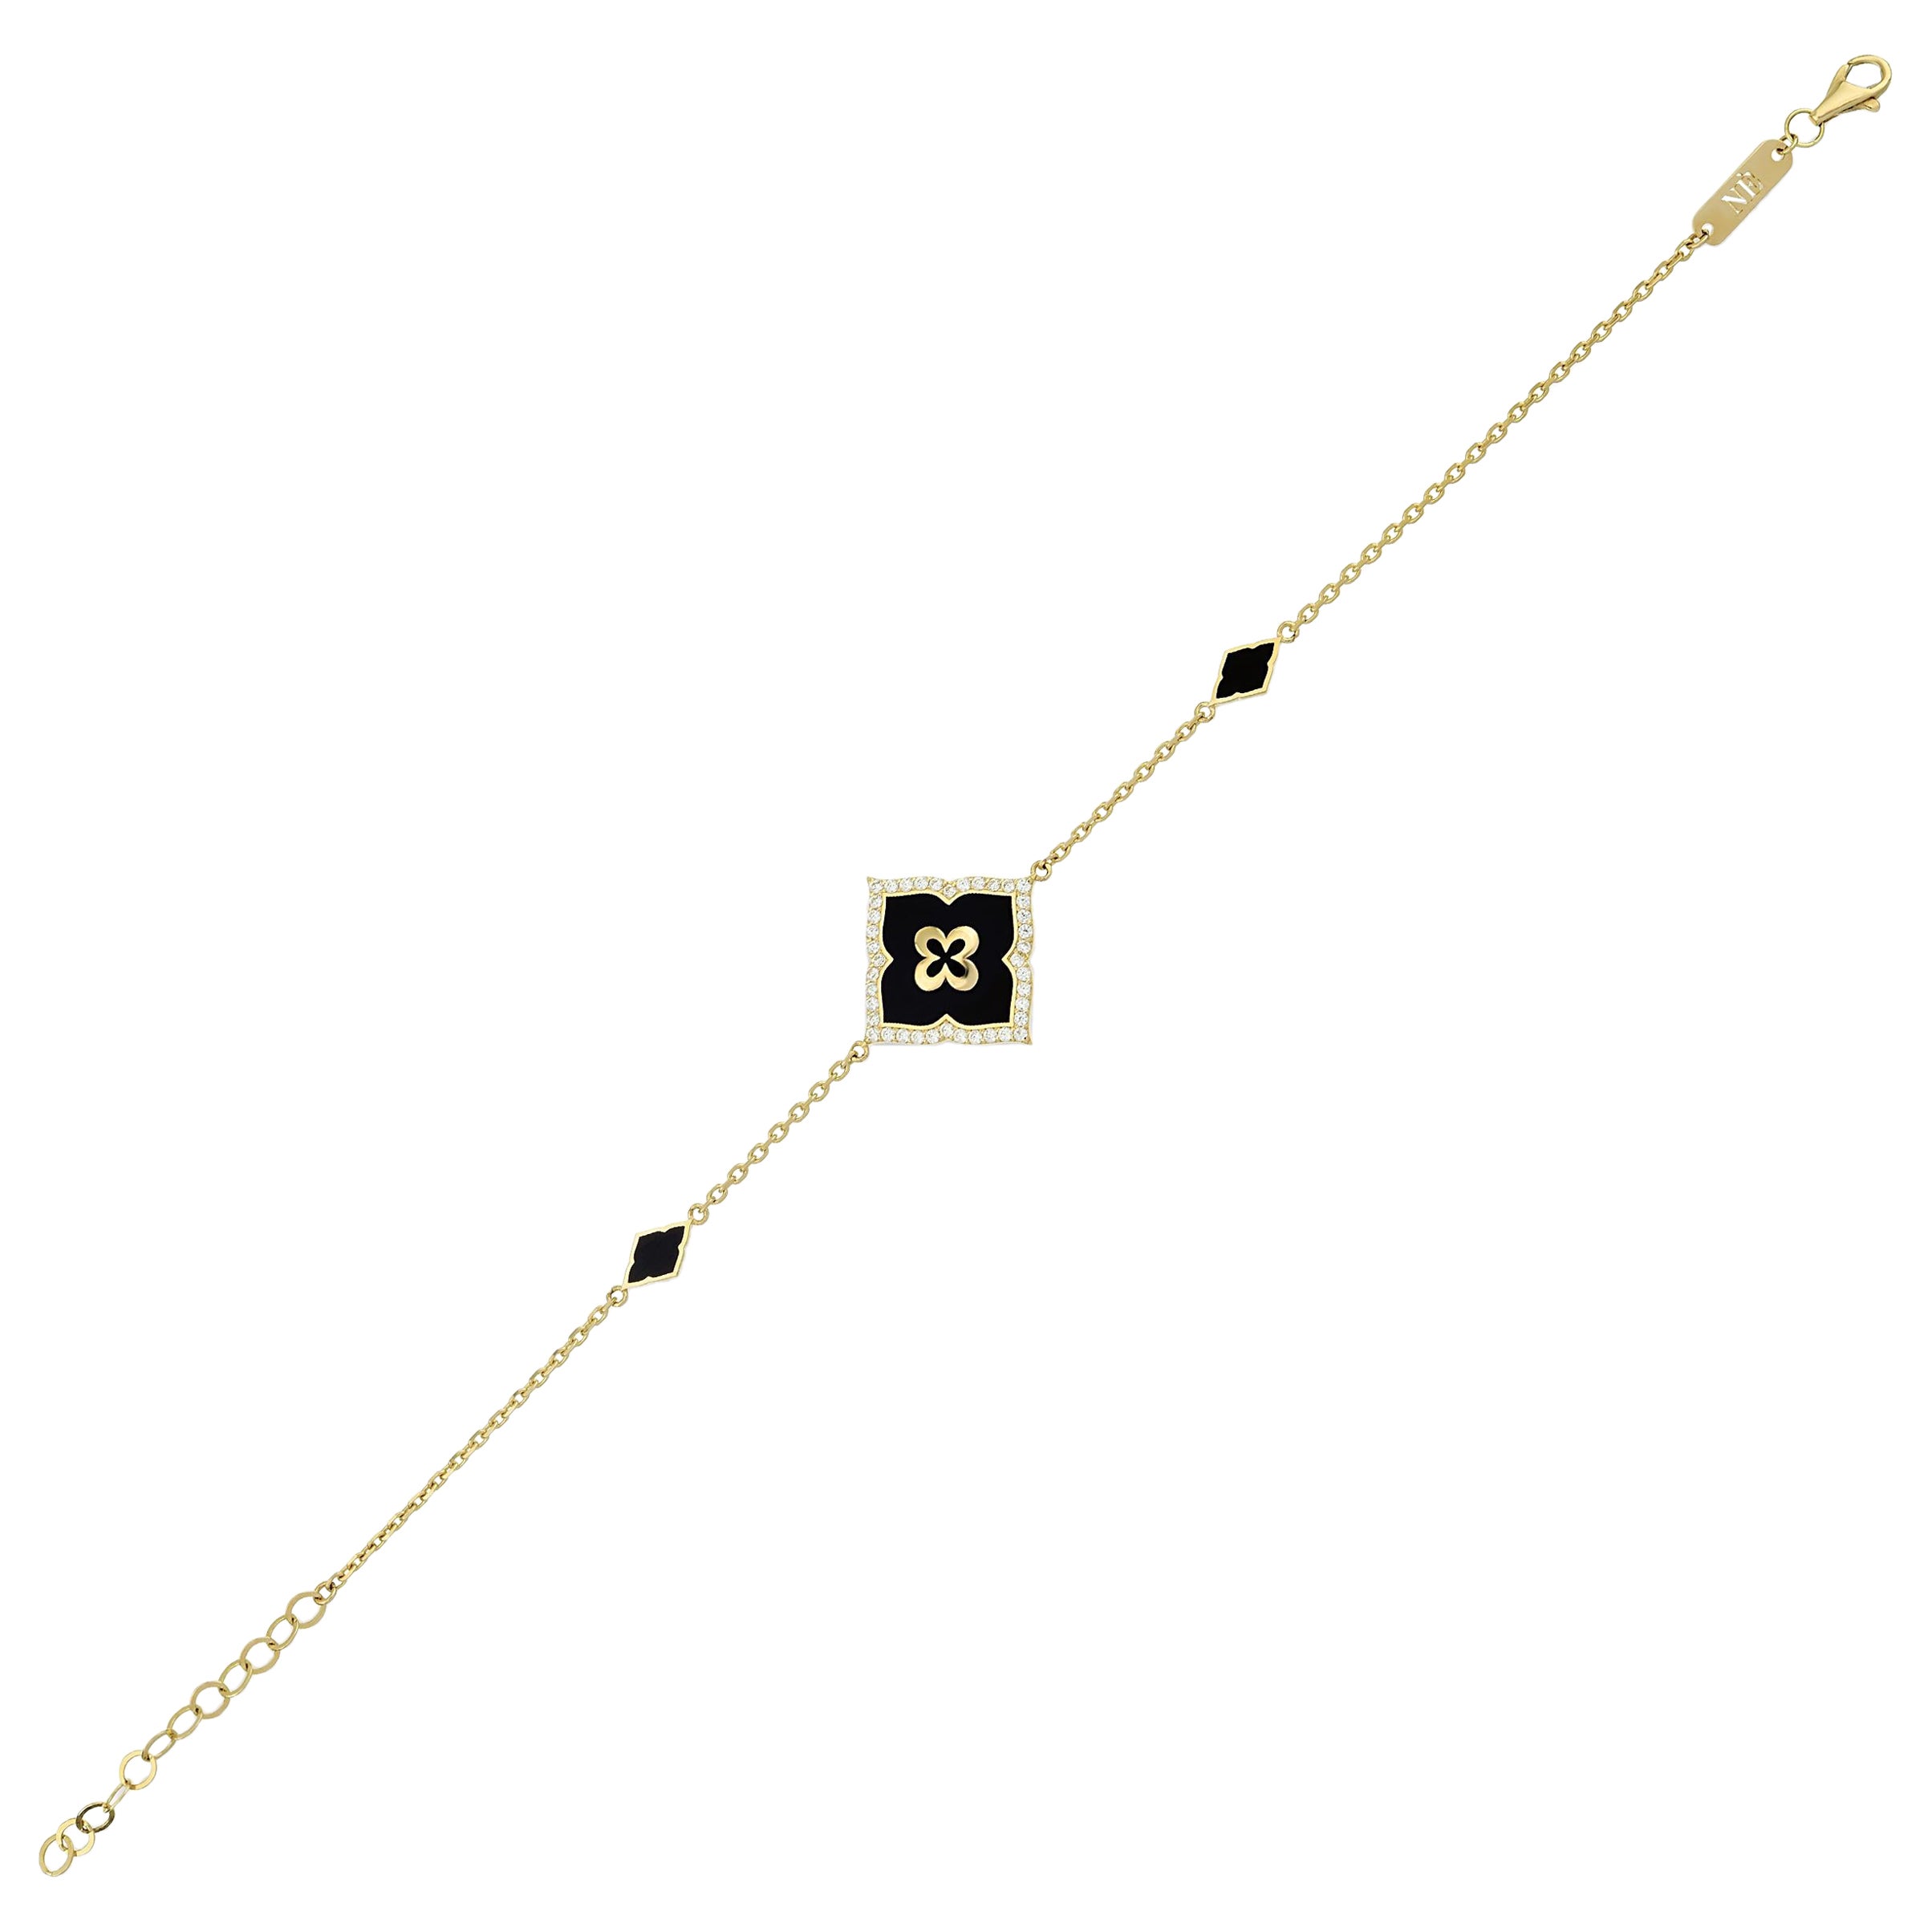 Solid Gold Diamond Bracelet with Black Fire Enamel Detailing For Sale